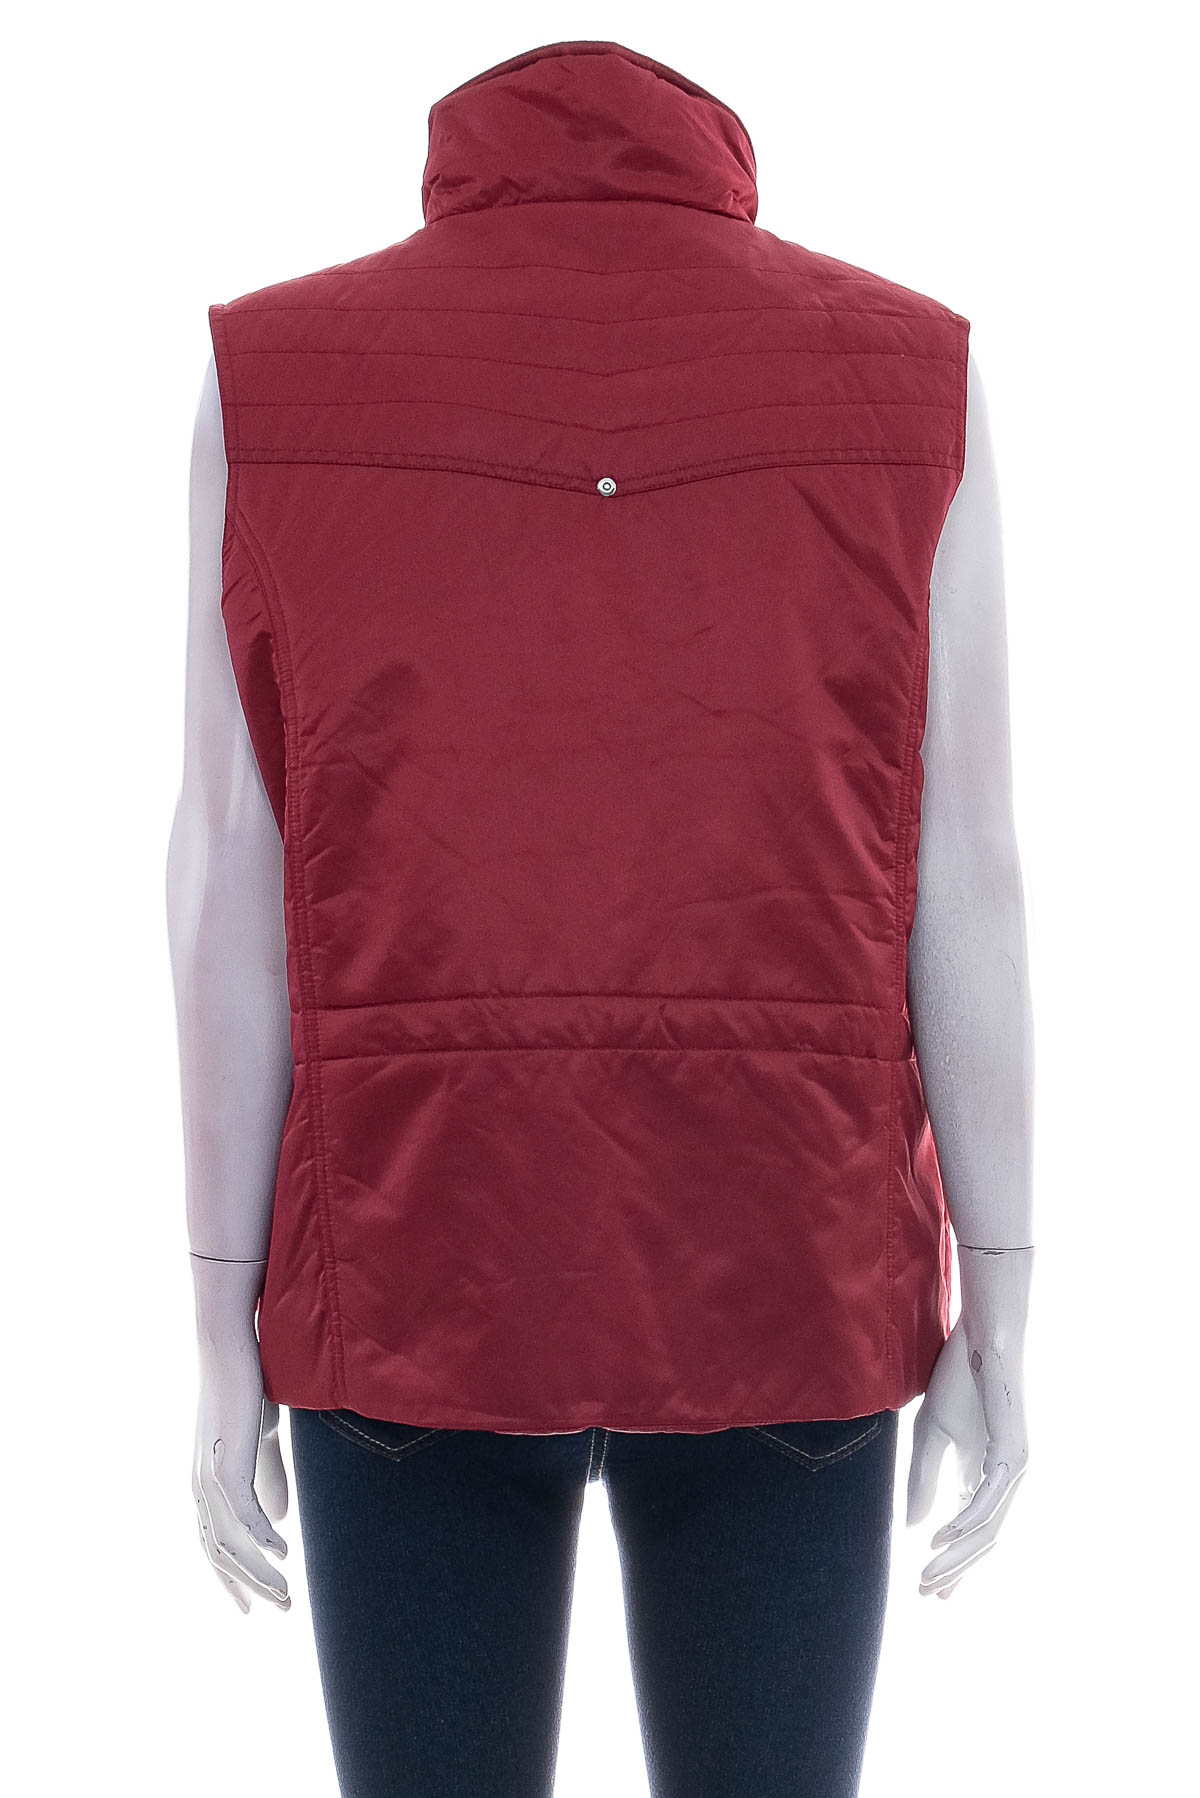 Women's vest - Greystone - 1